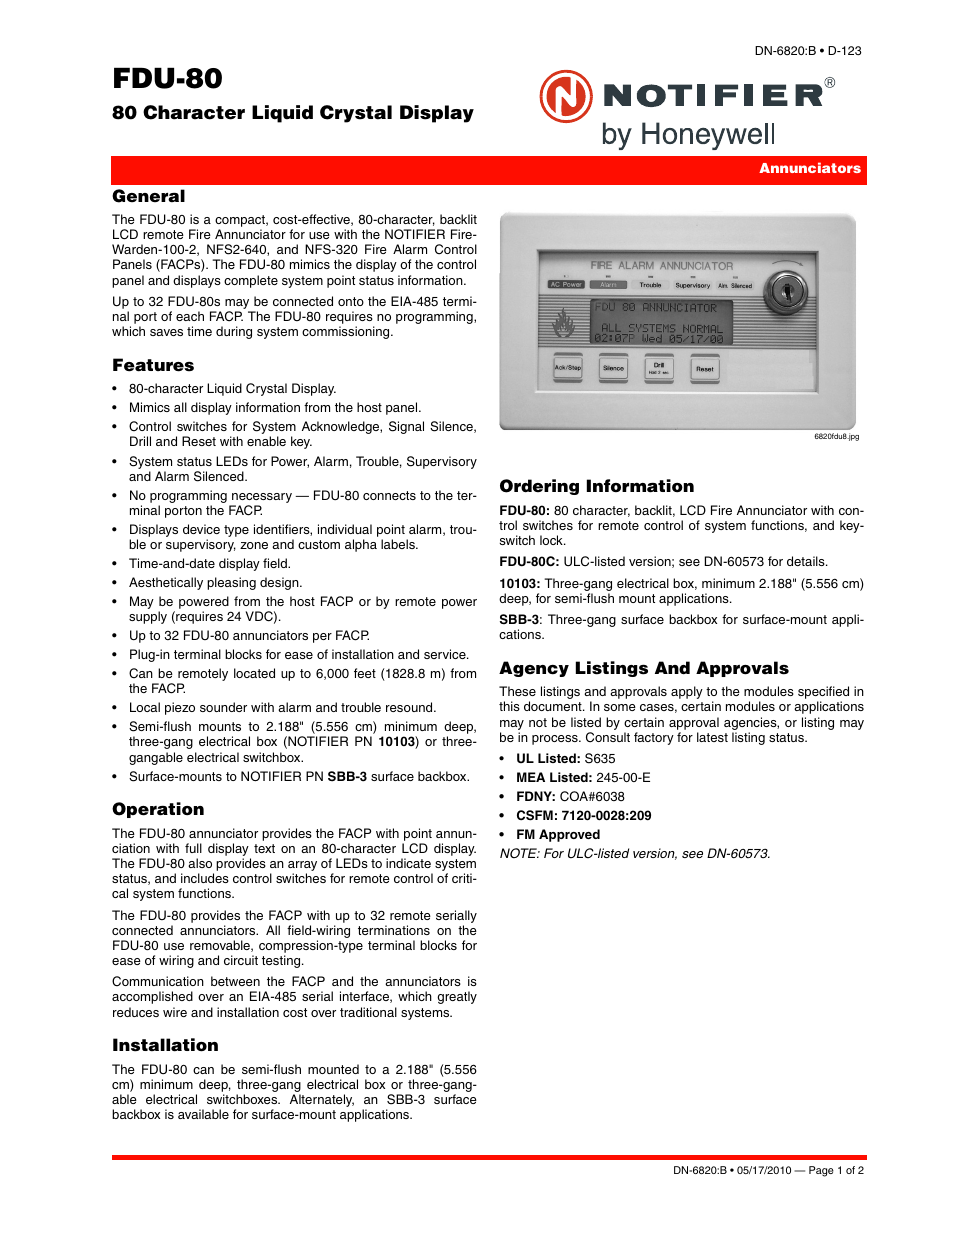 Notifier FDU-80 User Manual | 2 pages